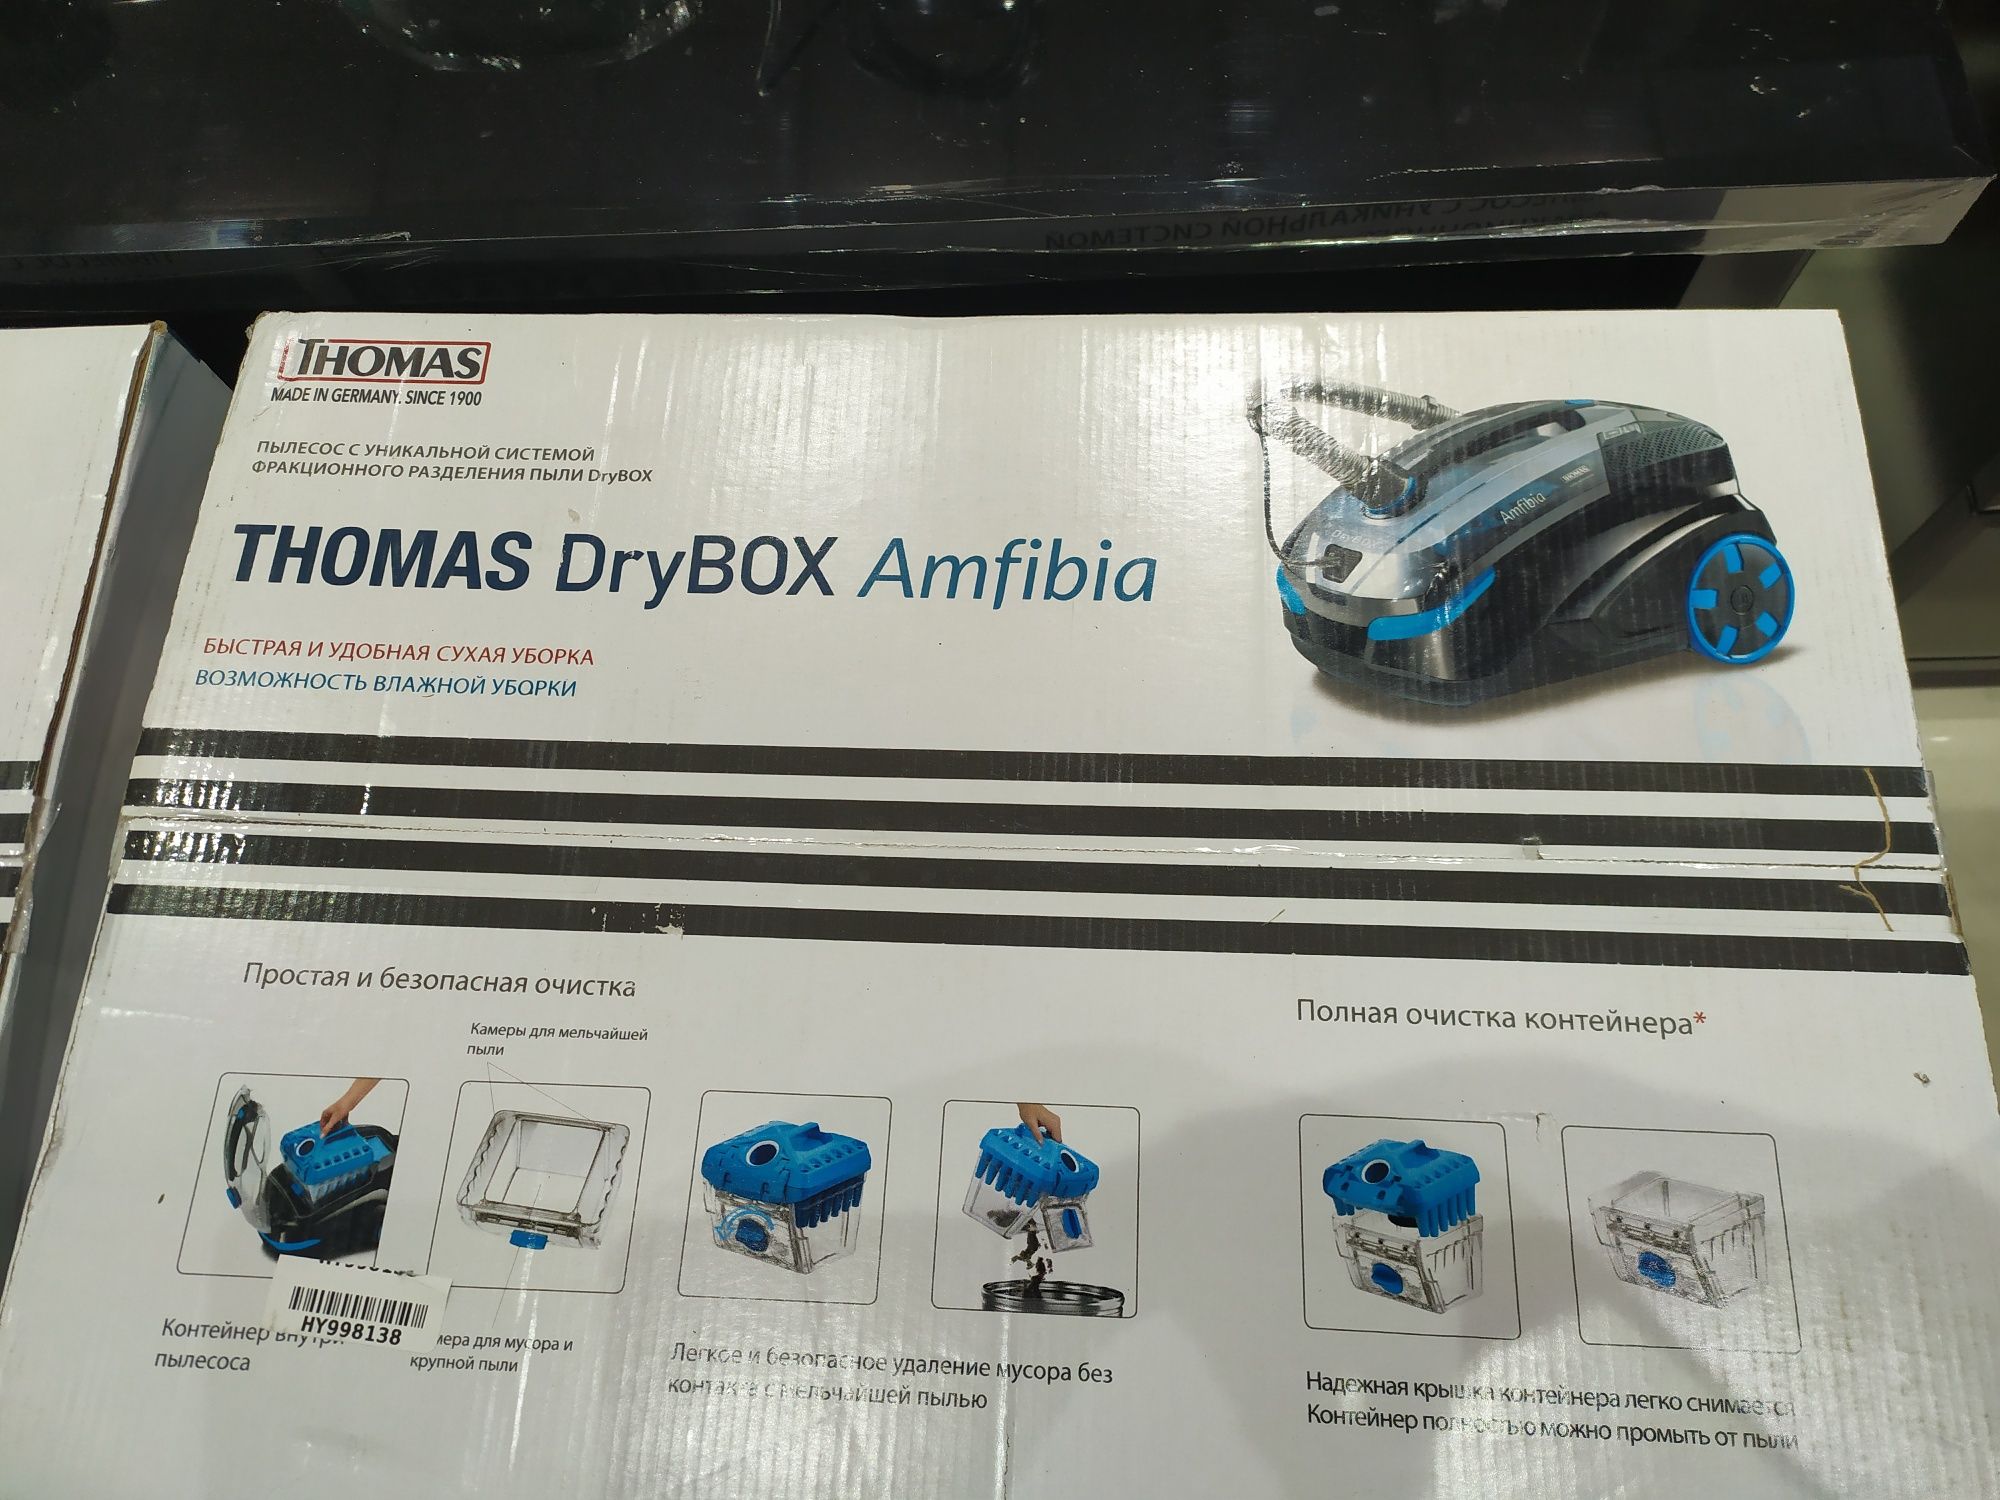 Amfibia Thomas Drybox